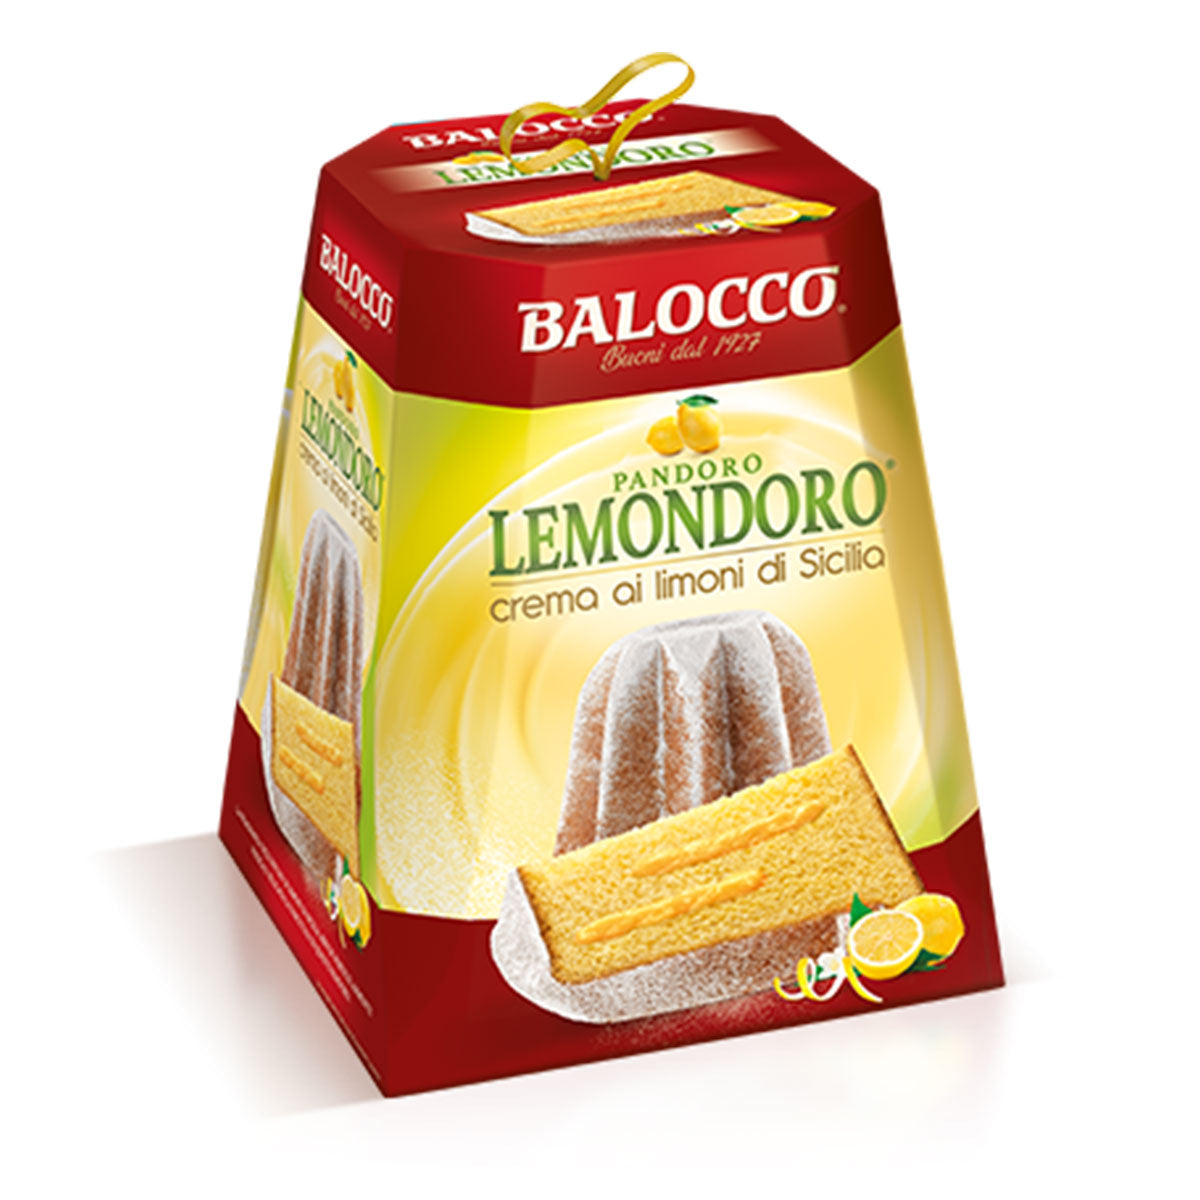 Balocco Pandoro Lemondoro